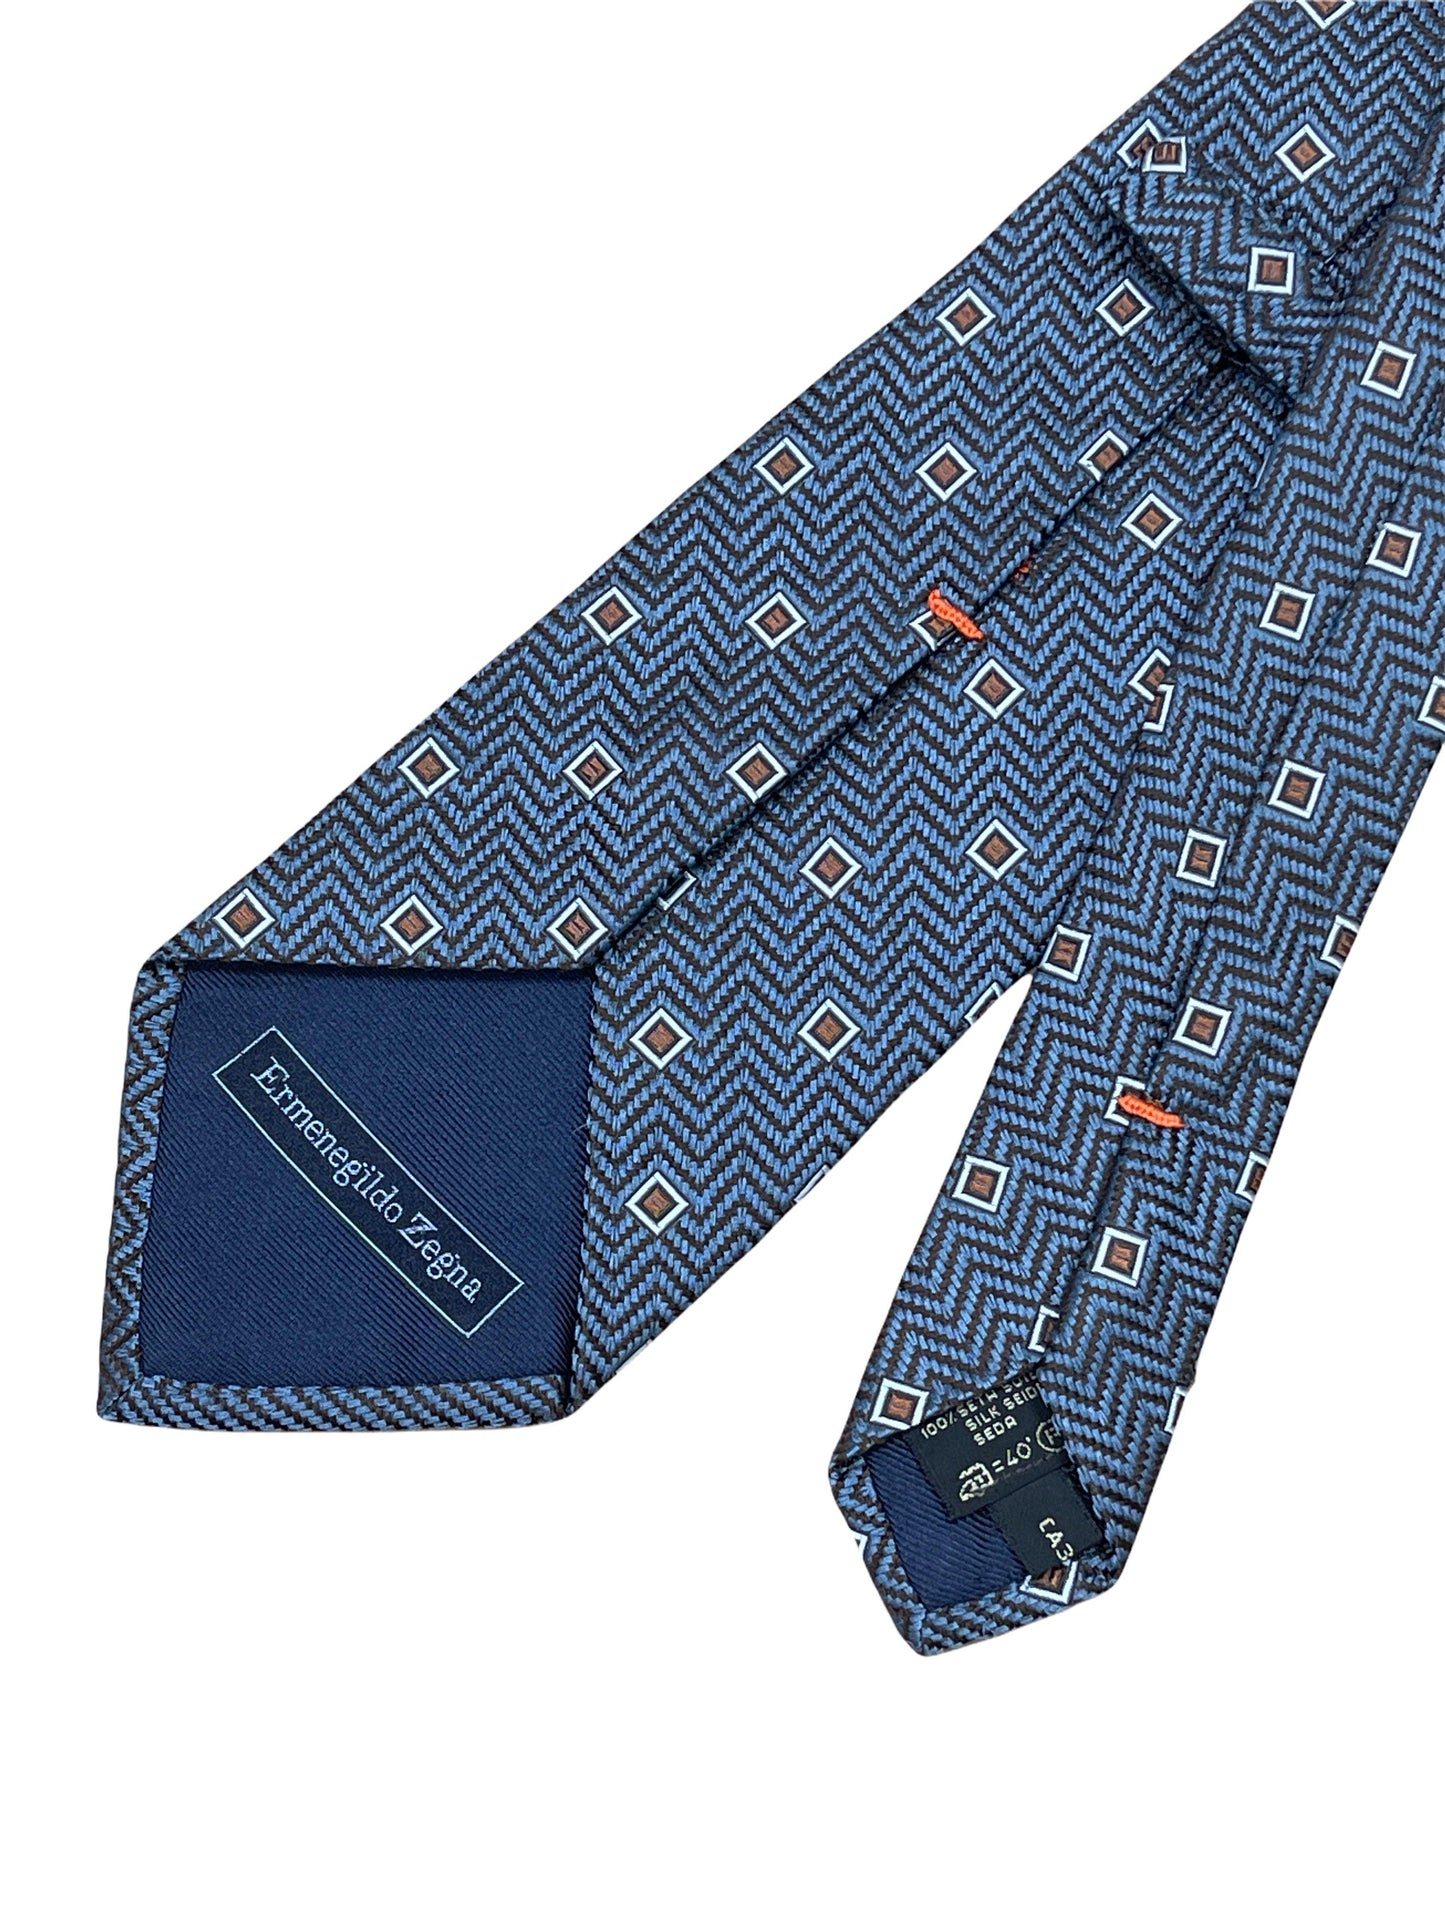 Ermenegildo Zegna dotted with herringbone blue tie - Genuine Design